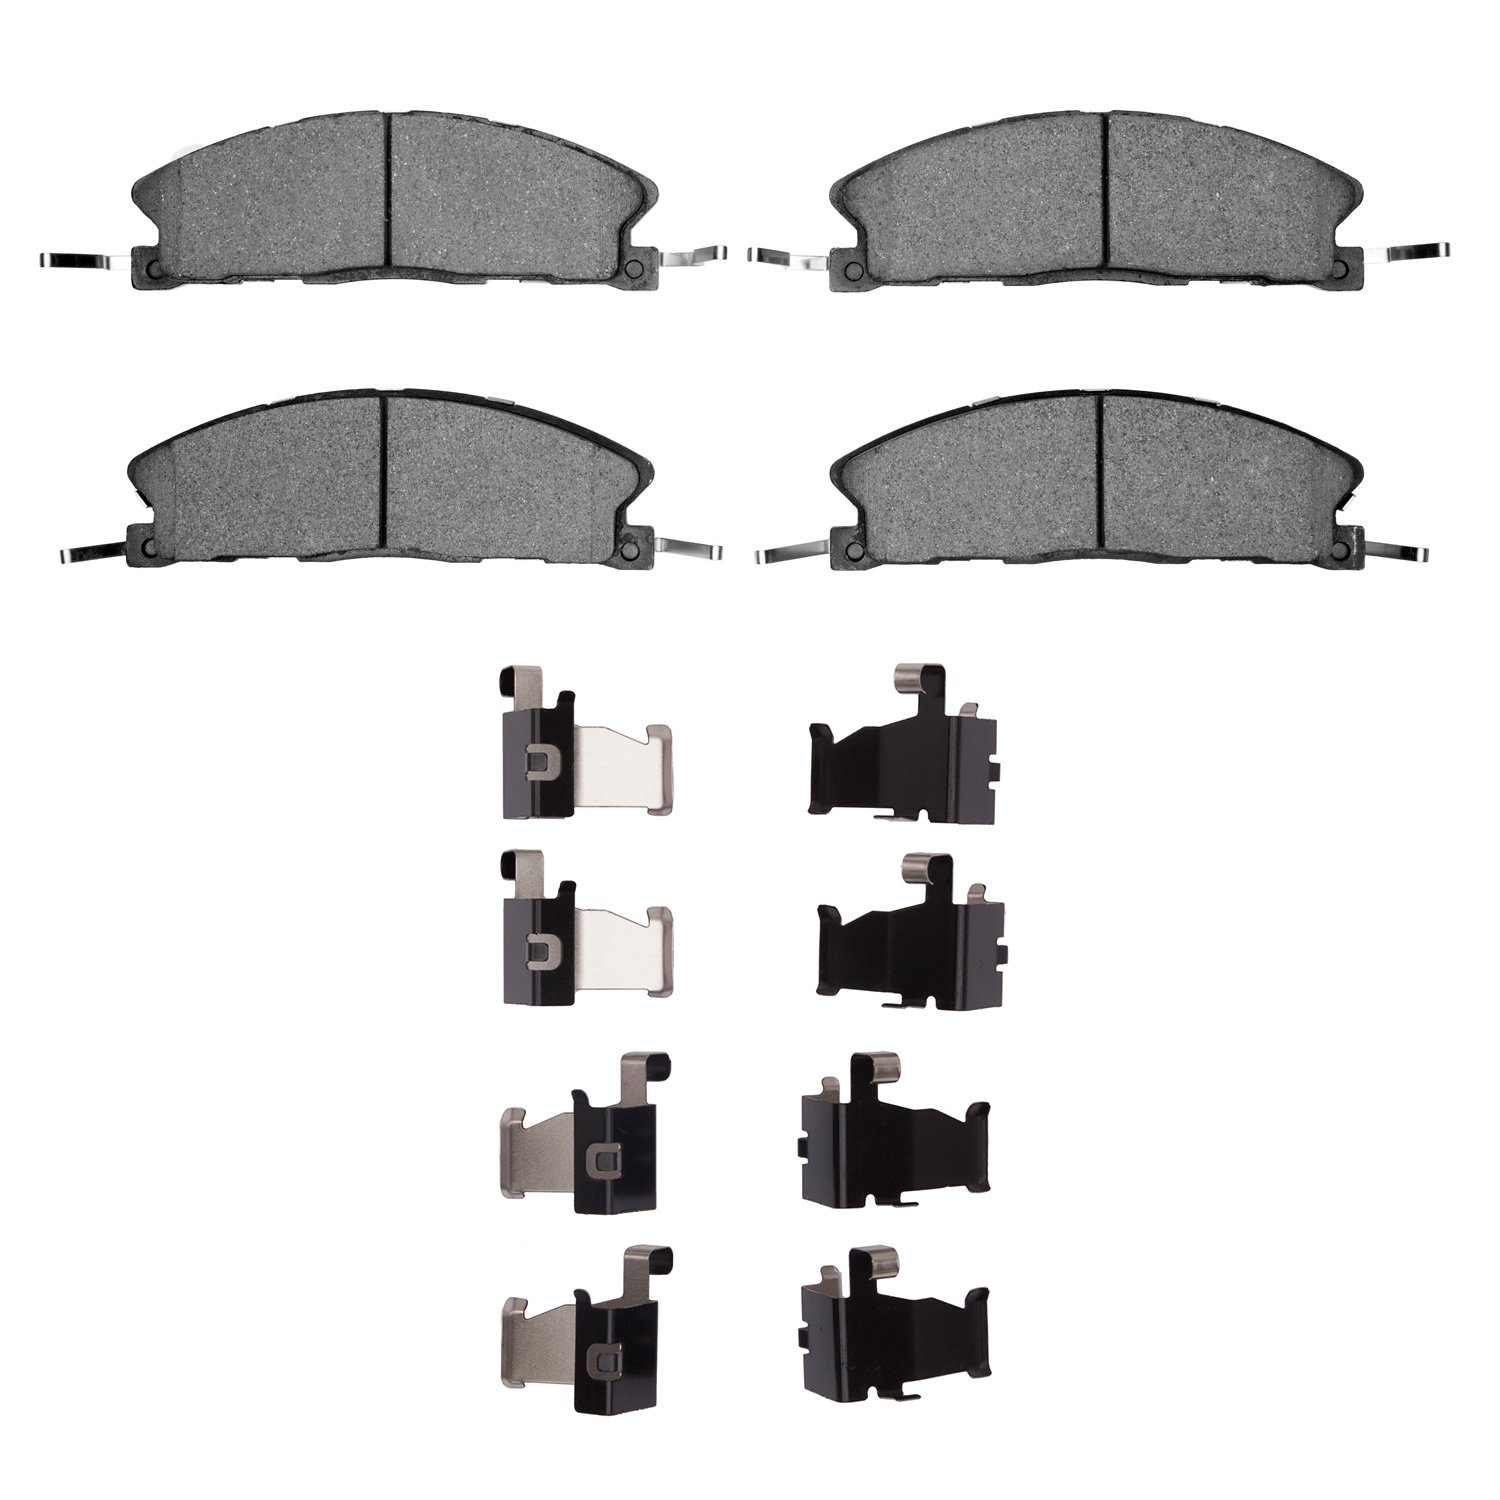 1310-1611-13 3000-Series Ceramic Brake Pads & Hardware Kit, 2013-2019 Ford/Lincoln/Mercury/Mazda, Position: Front